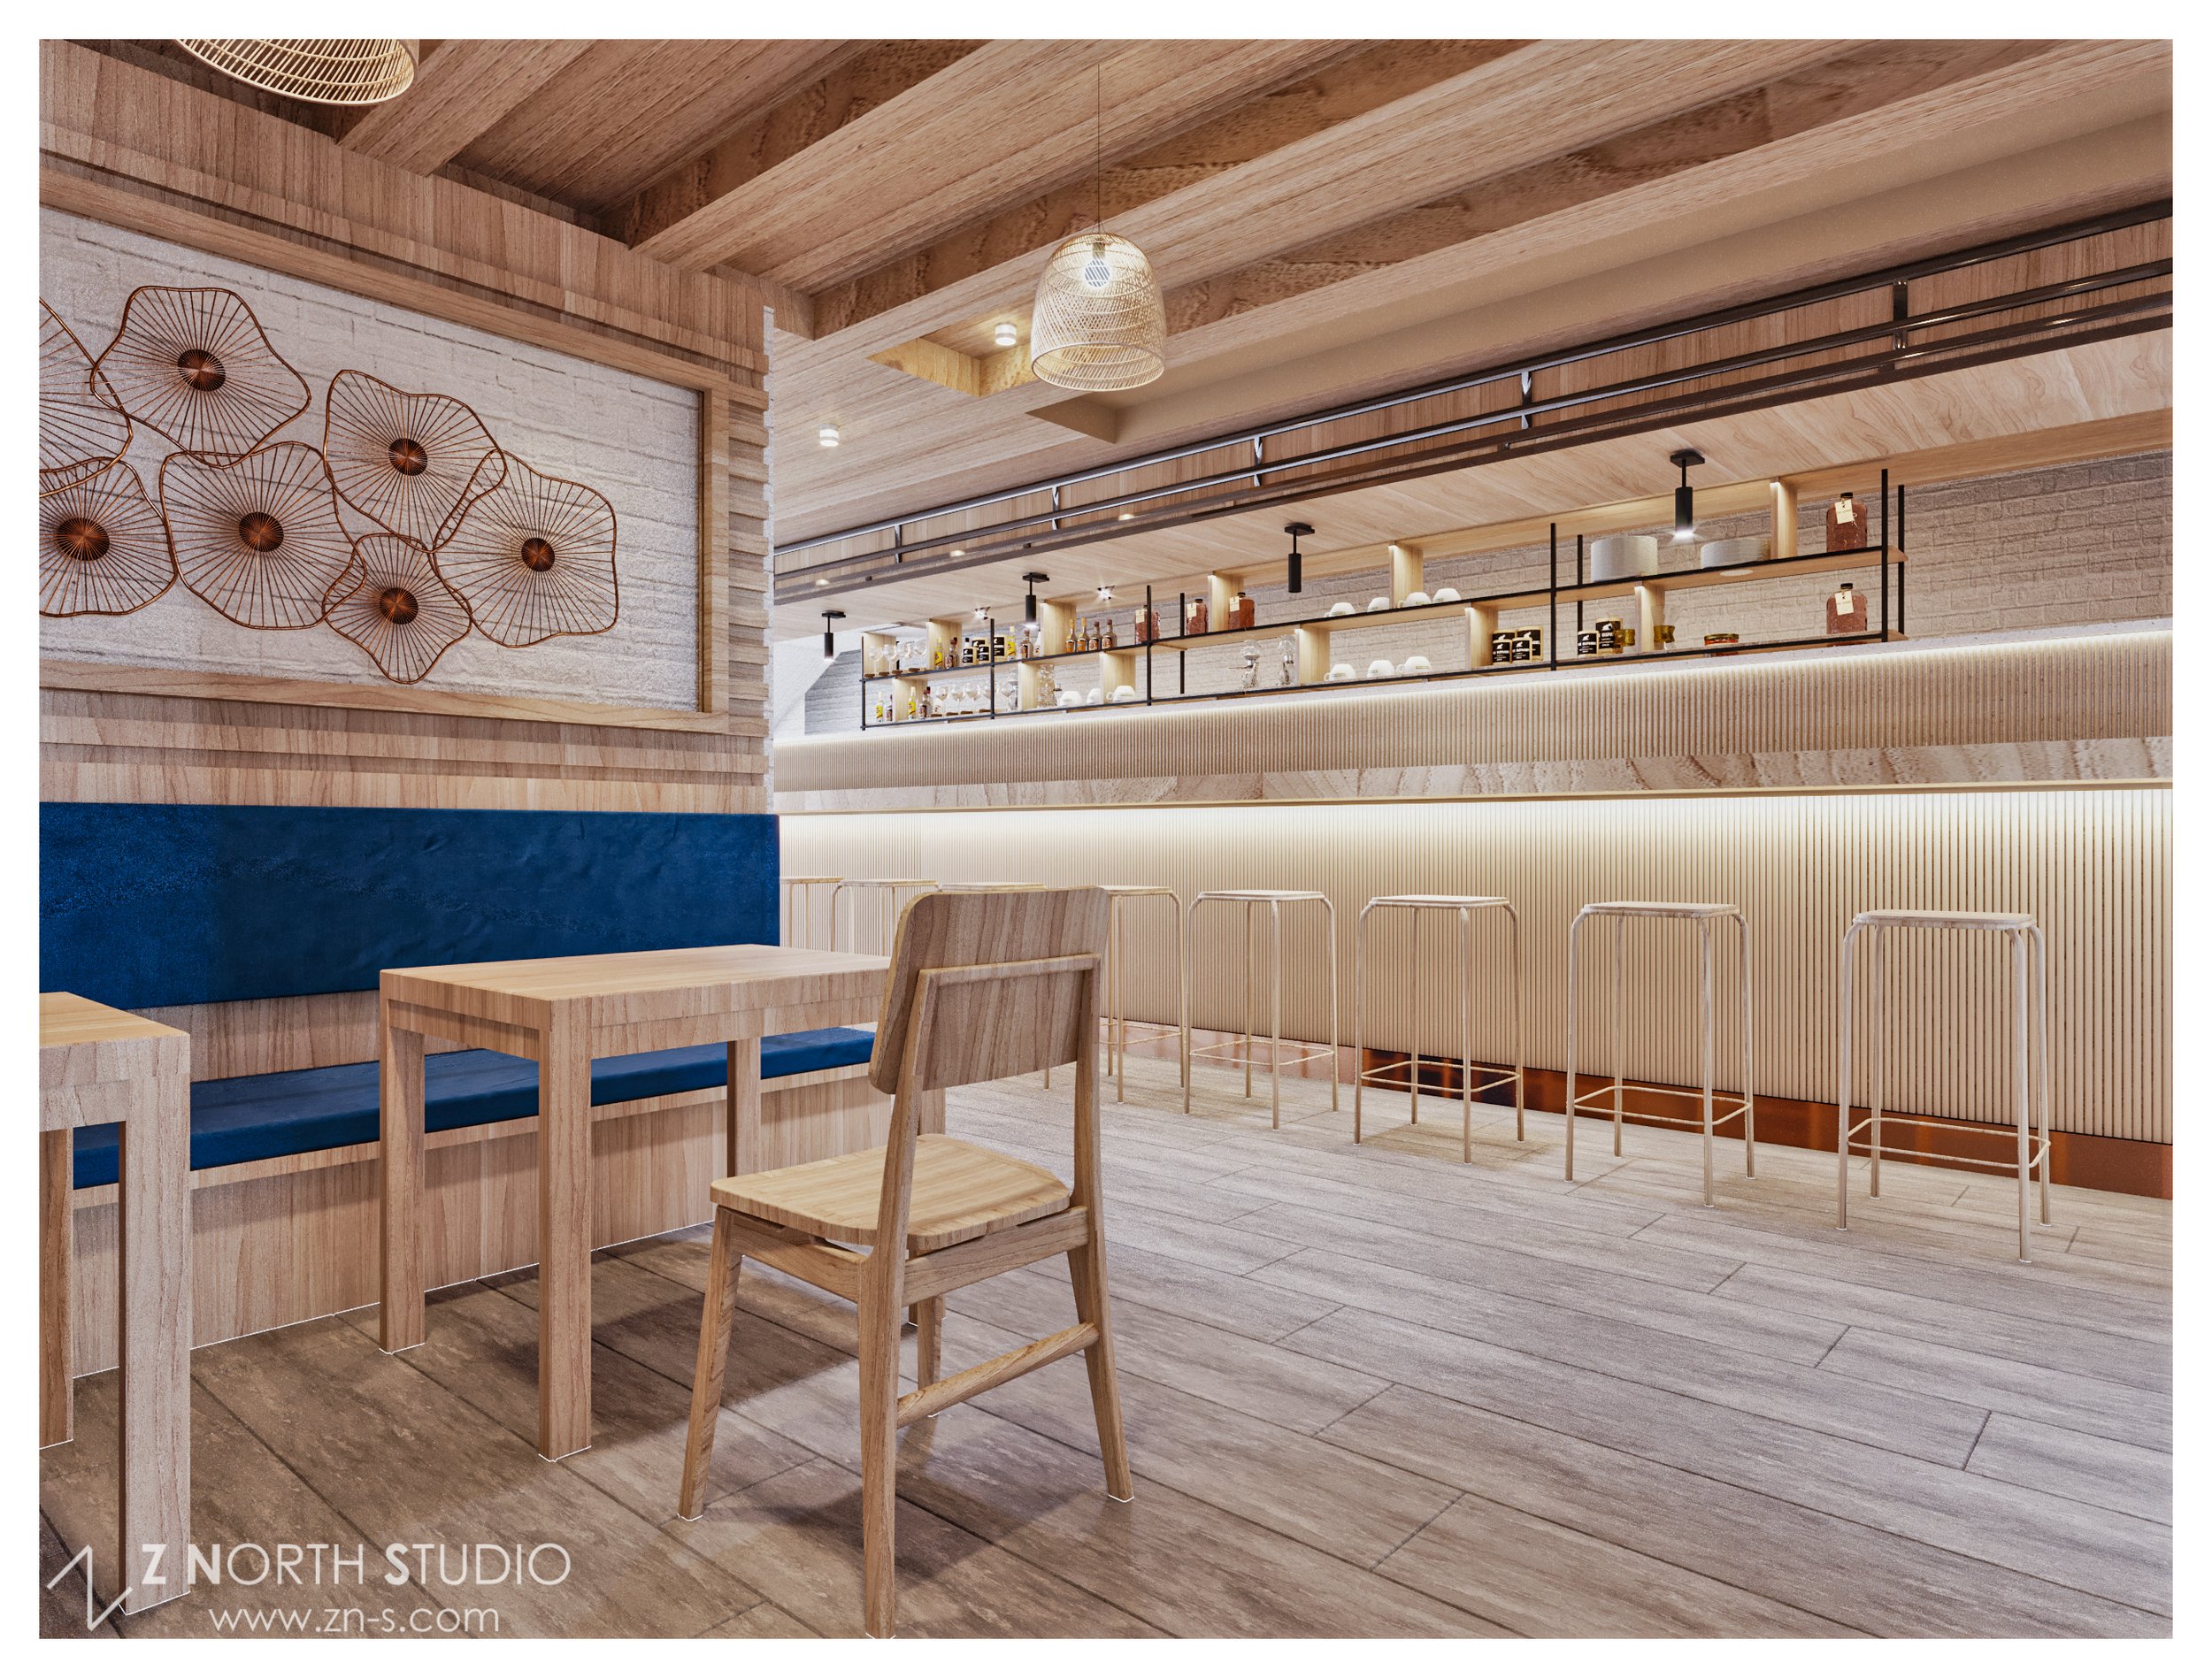 Umai Nori Restaurant Design Z North Studio (7).jpg